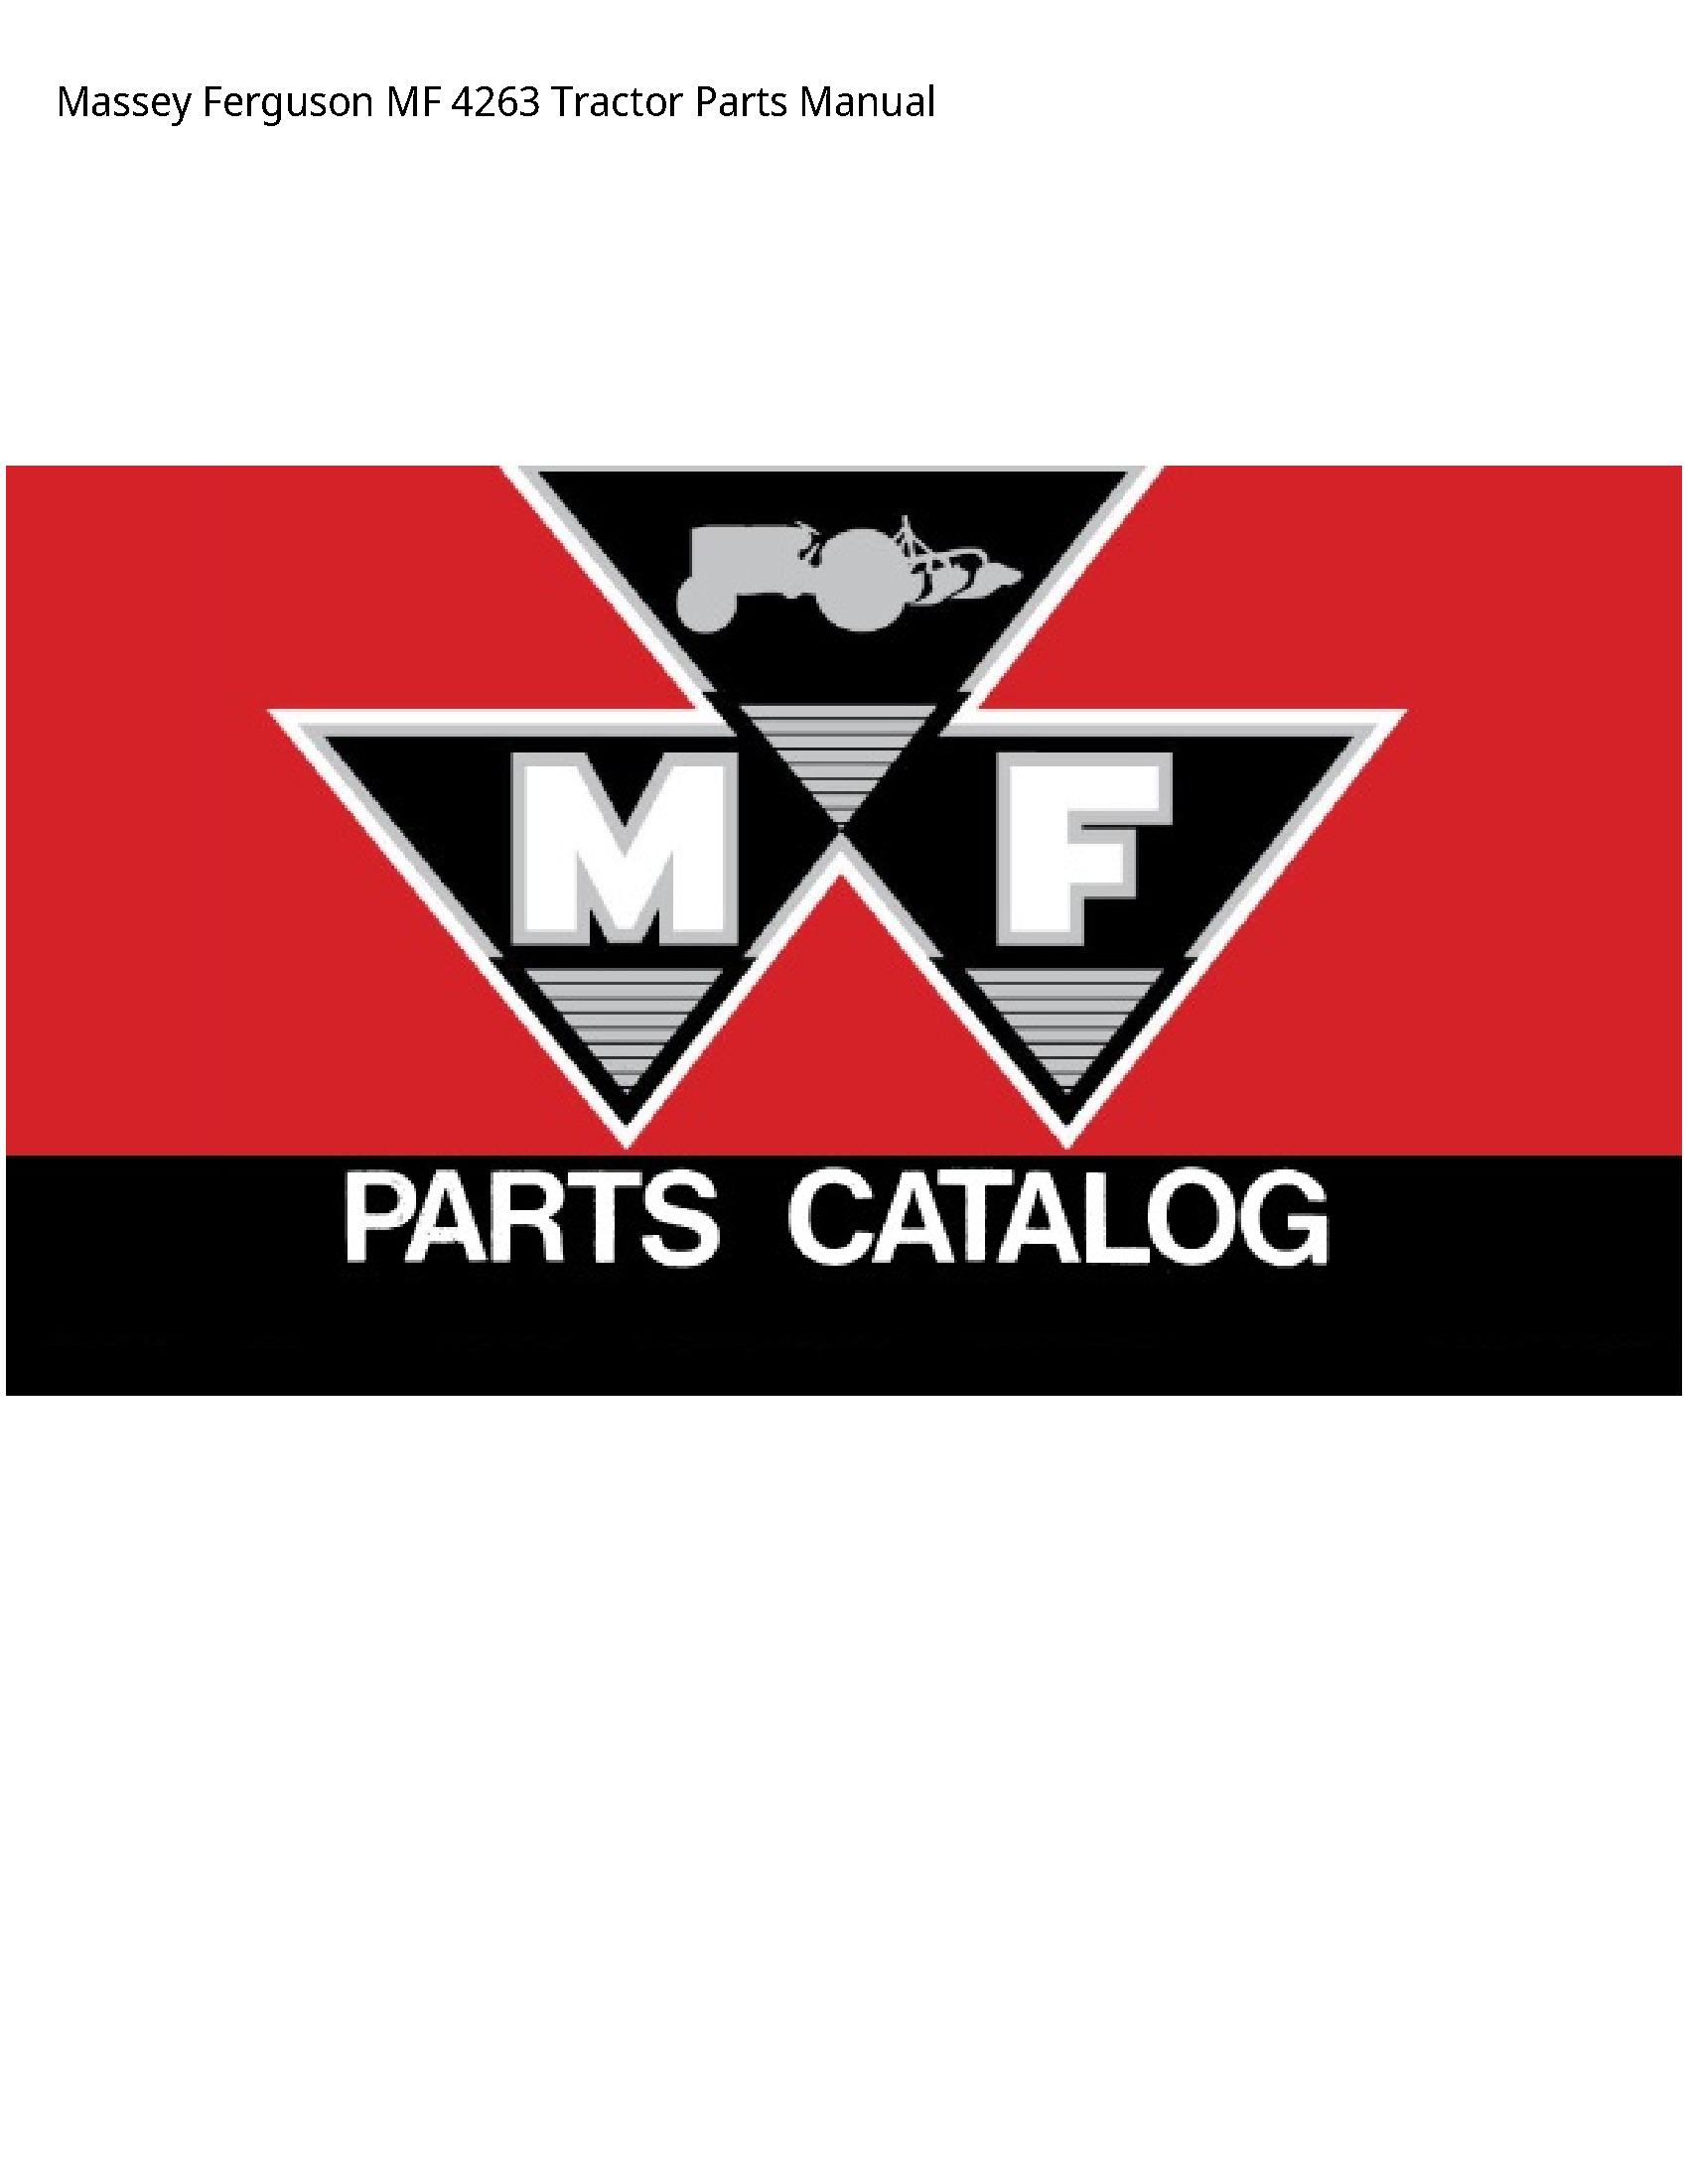 Massey Ferguson 4263 MF Tractor Parts manual